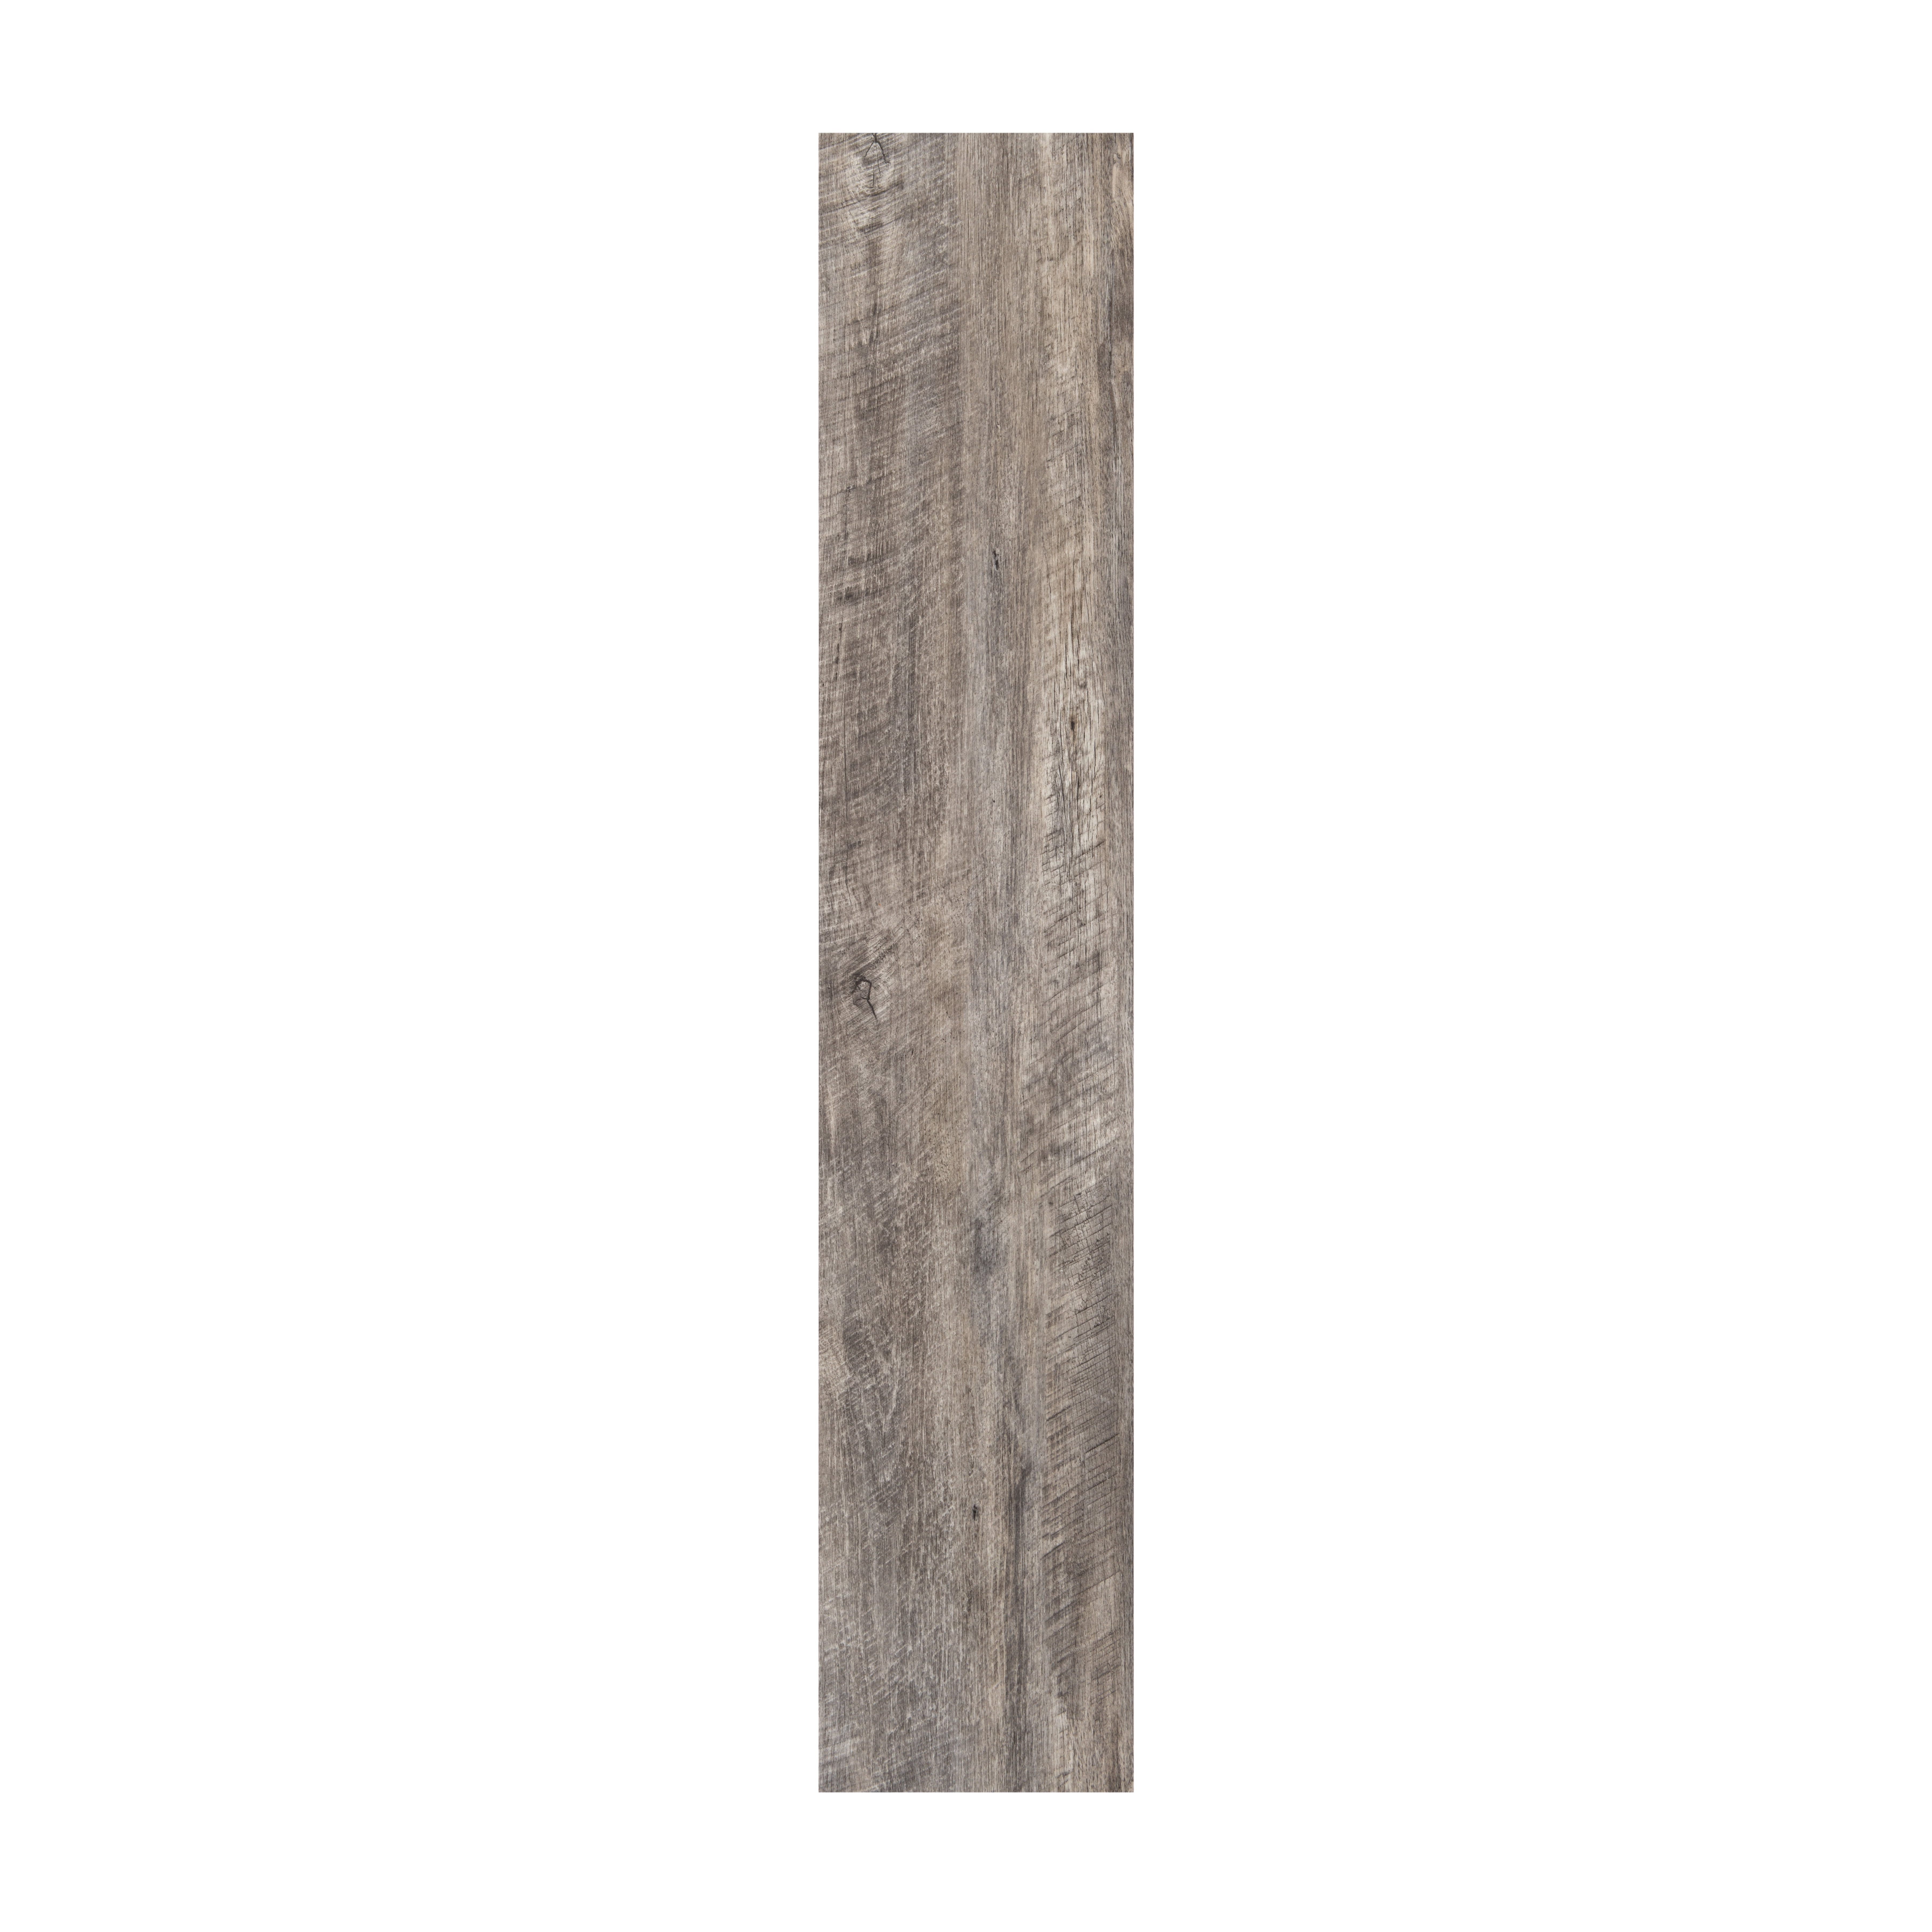 Flex Plank 7 Almond (46sf p/ carton) $5.24 p/ sf SHIPPING INCLUDED